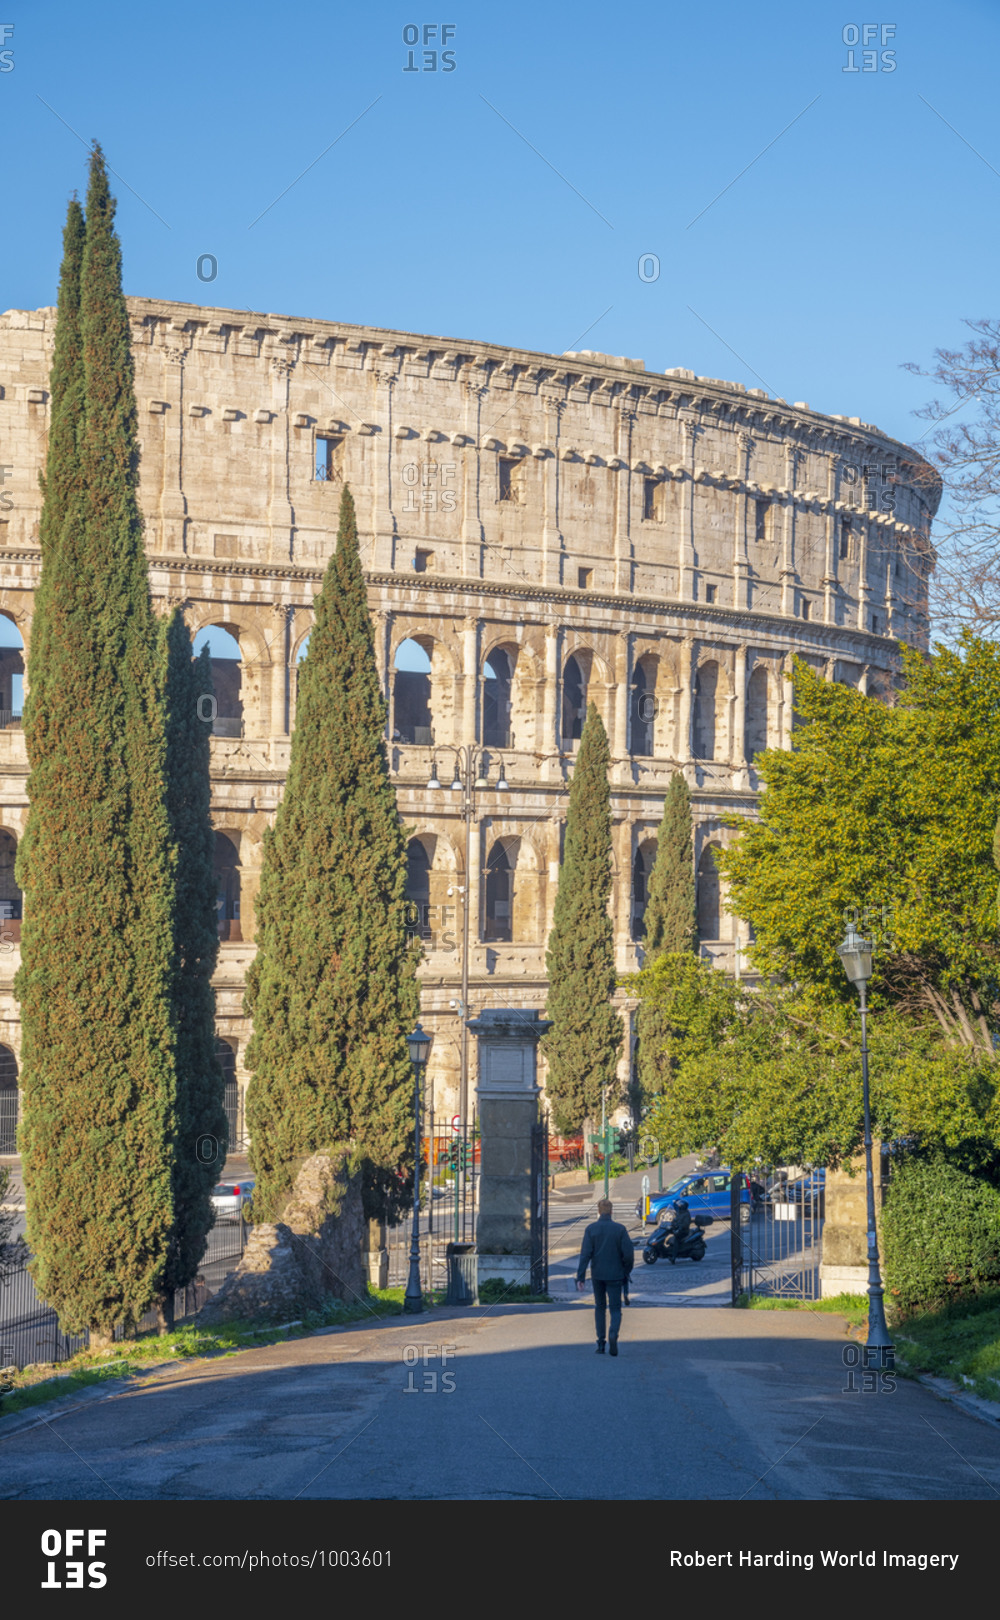 Coliseum from Parco del Colle Oppio, UNESCO World Heritage Site, Rome, Lazio, Italy, Europe